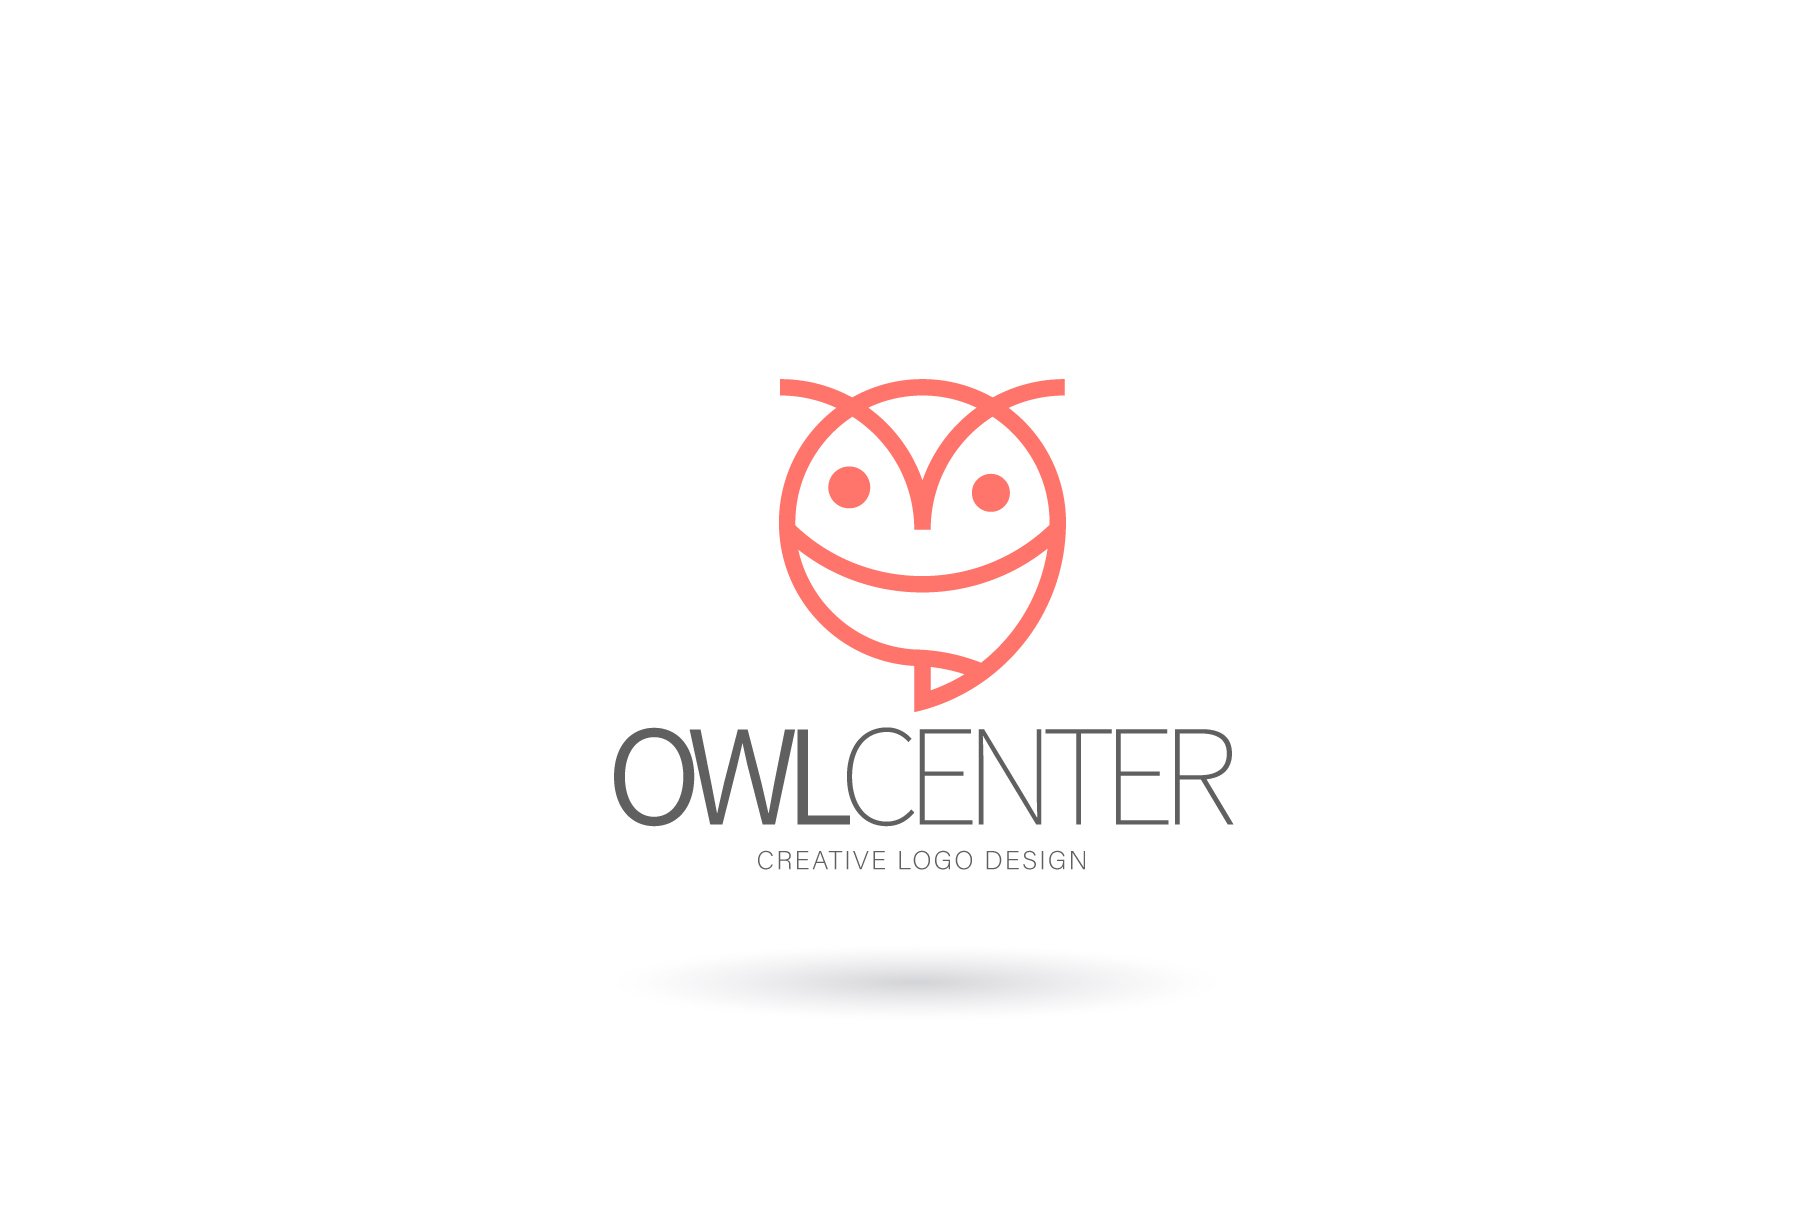 Owl logo preview image.